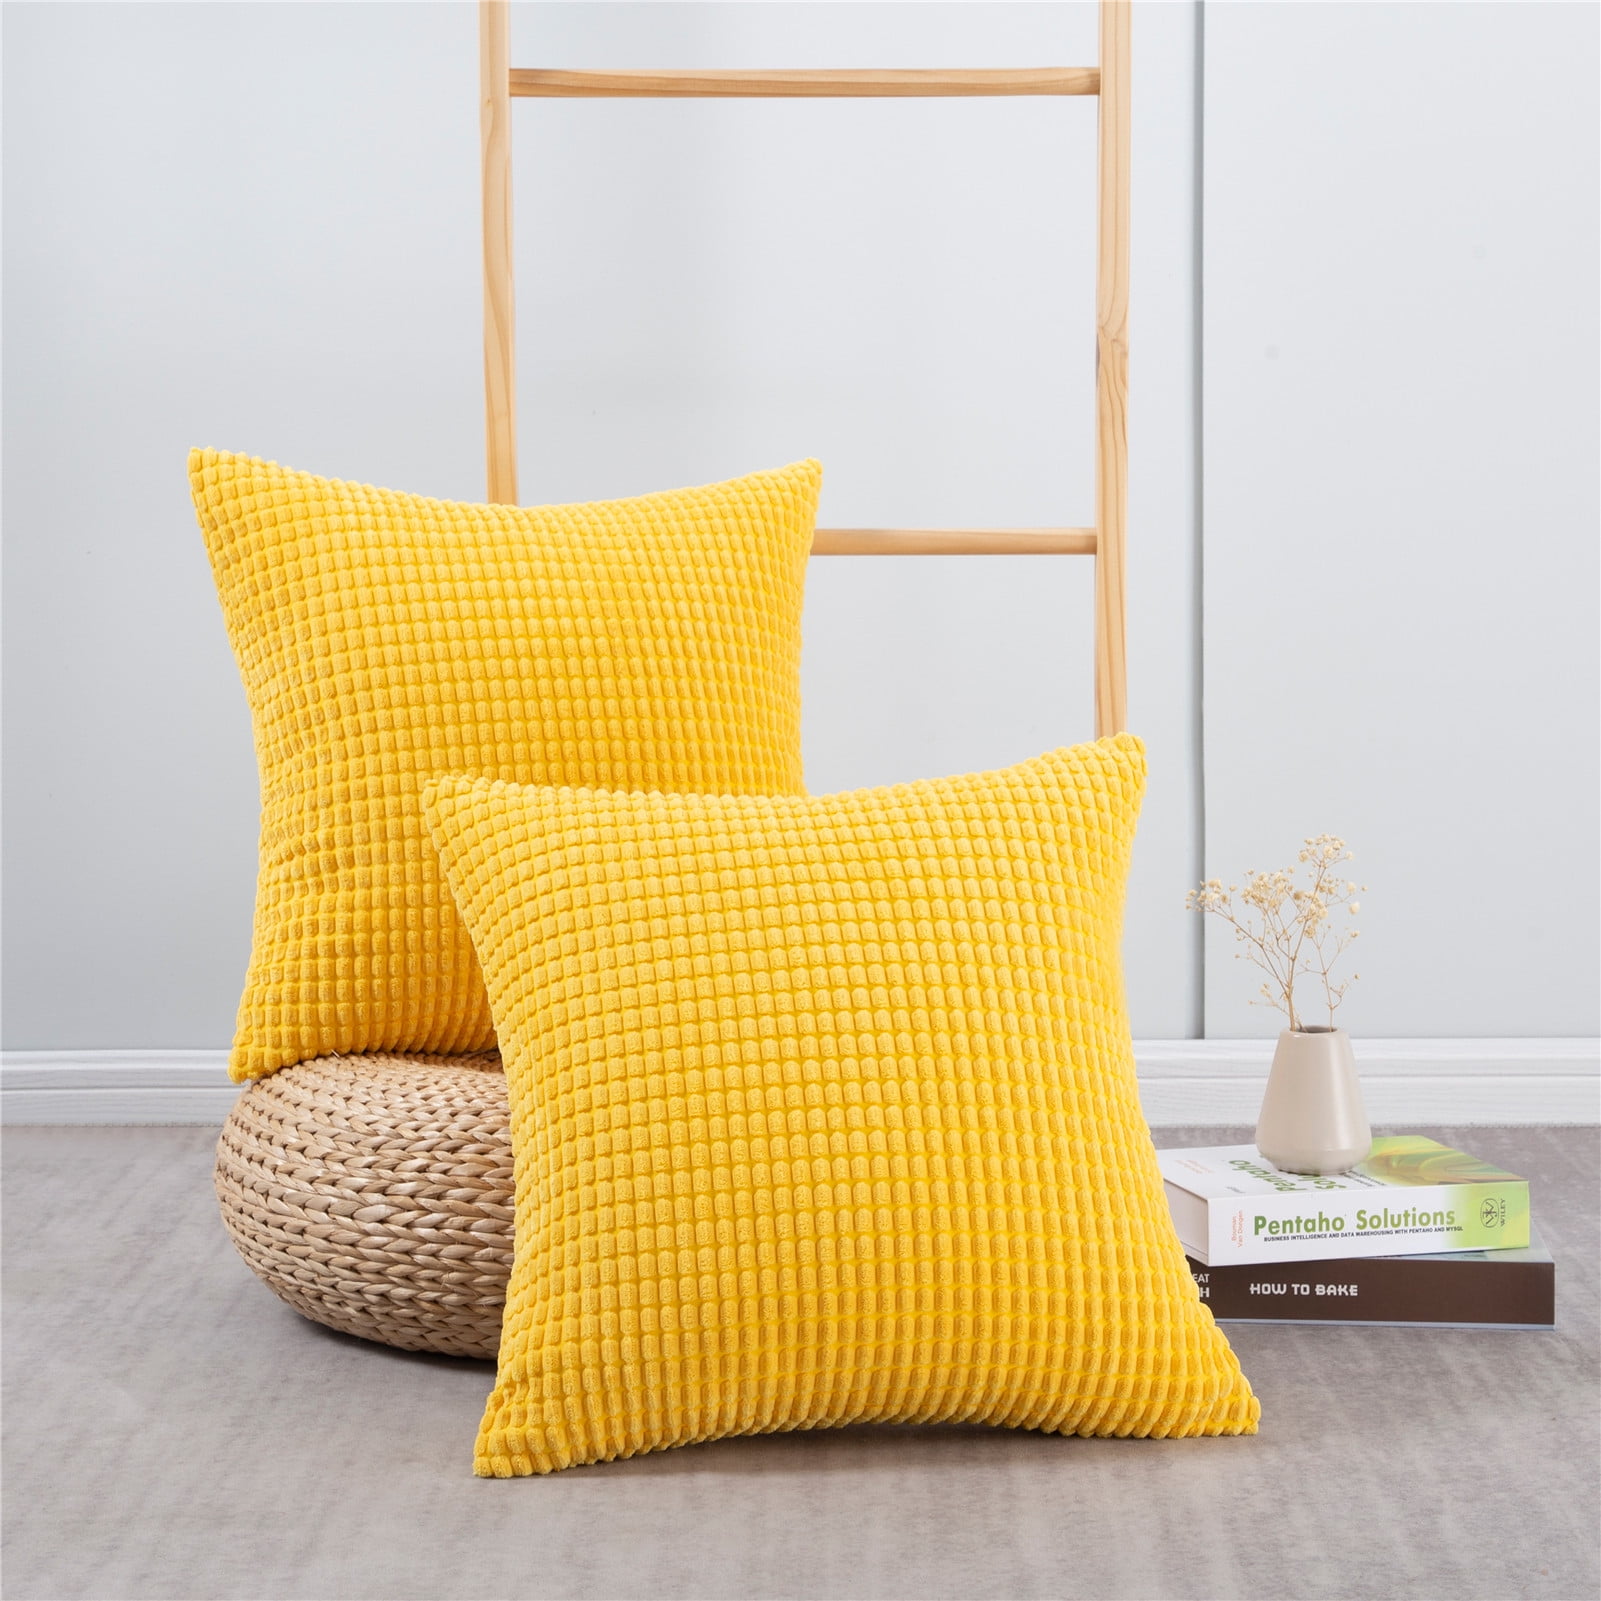 Topfinel Colorful Geometric Cushion Cover 40 x 40cm 16" Cotton Linen Home Square 